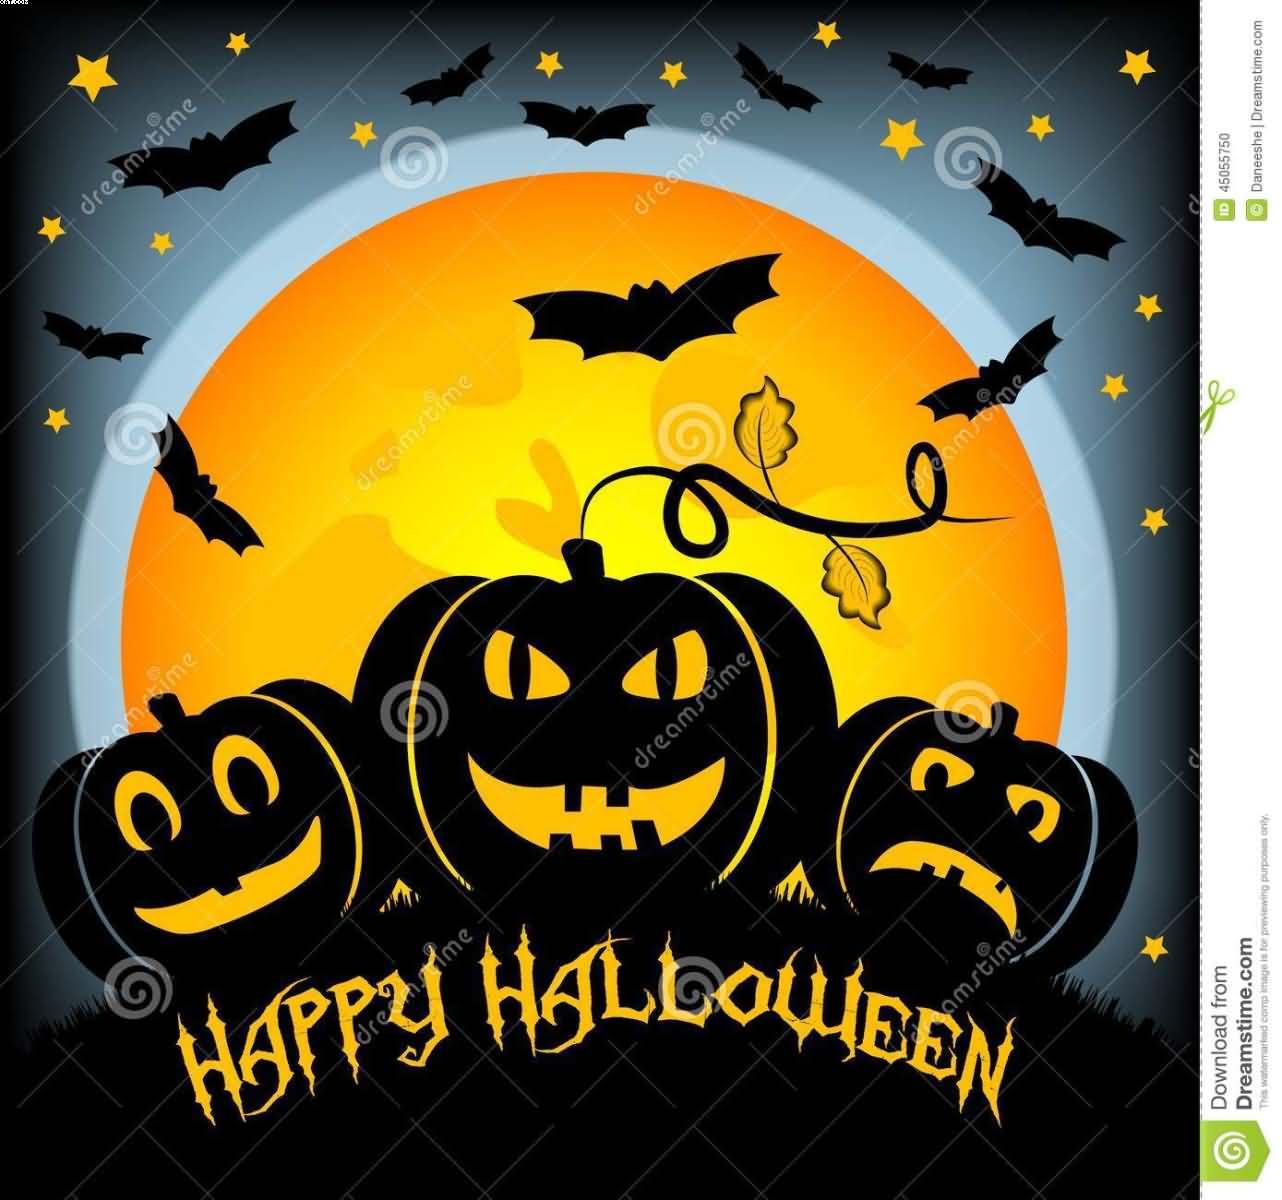 Happy Halloween illustration greeting card